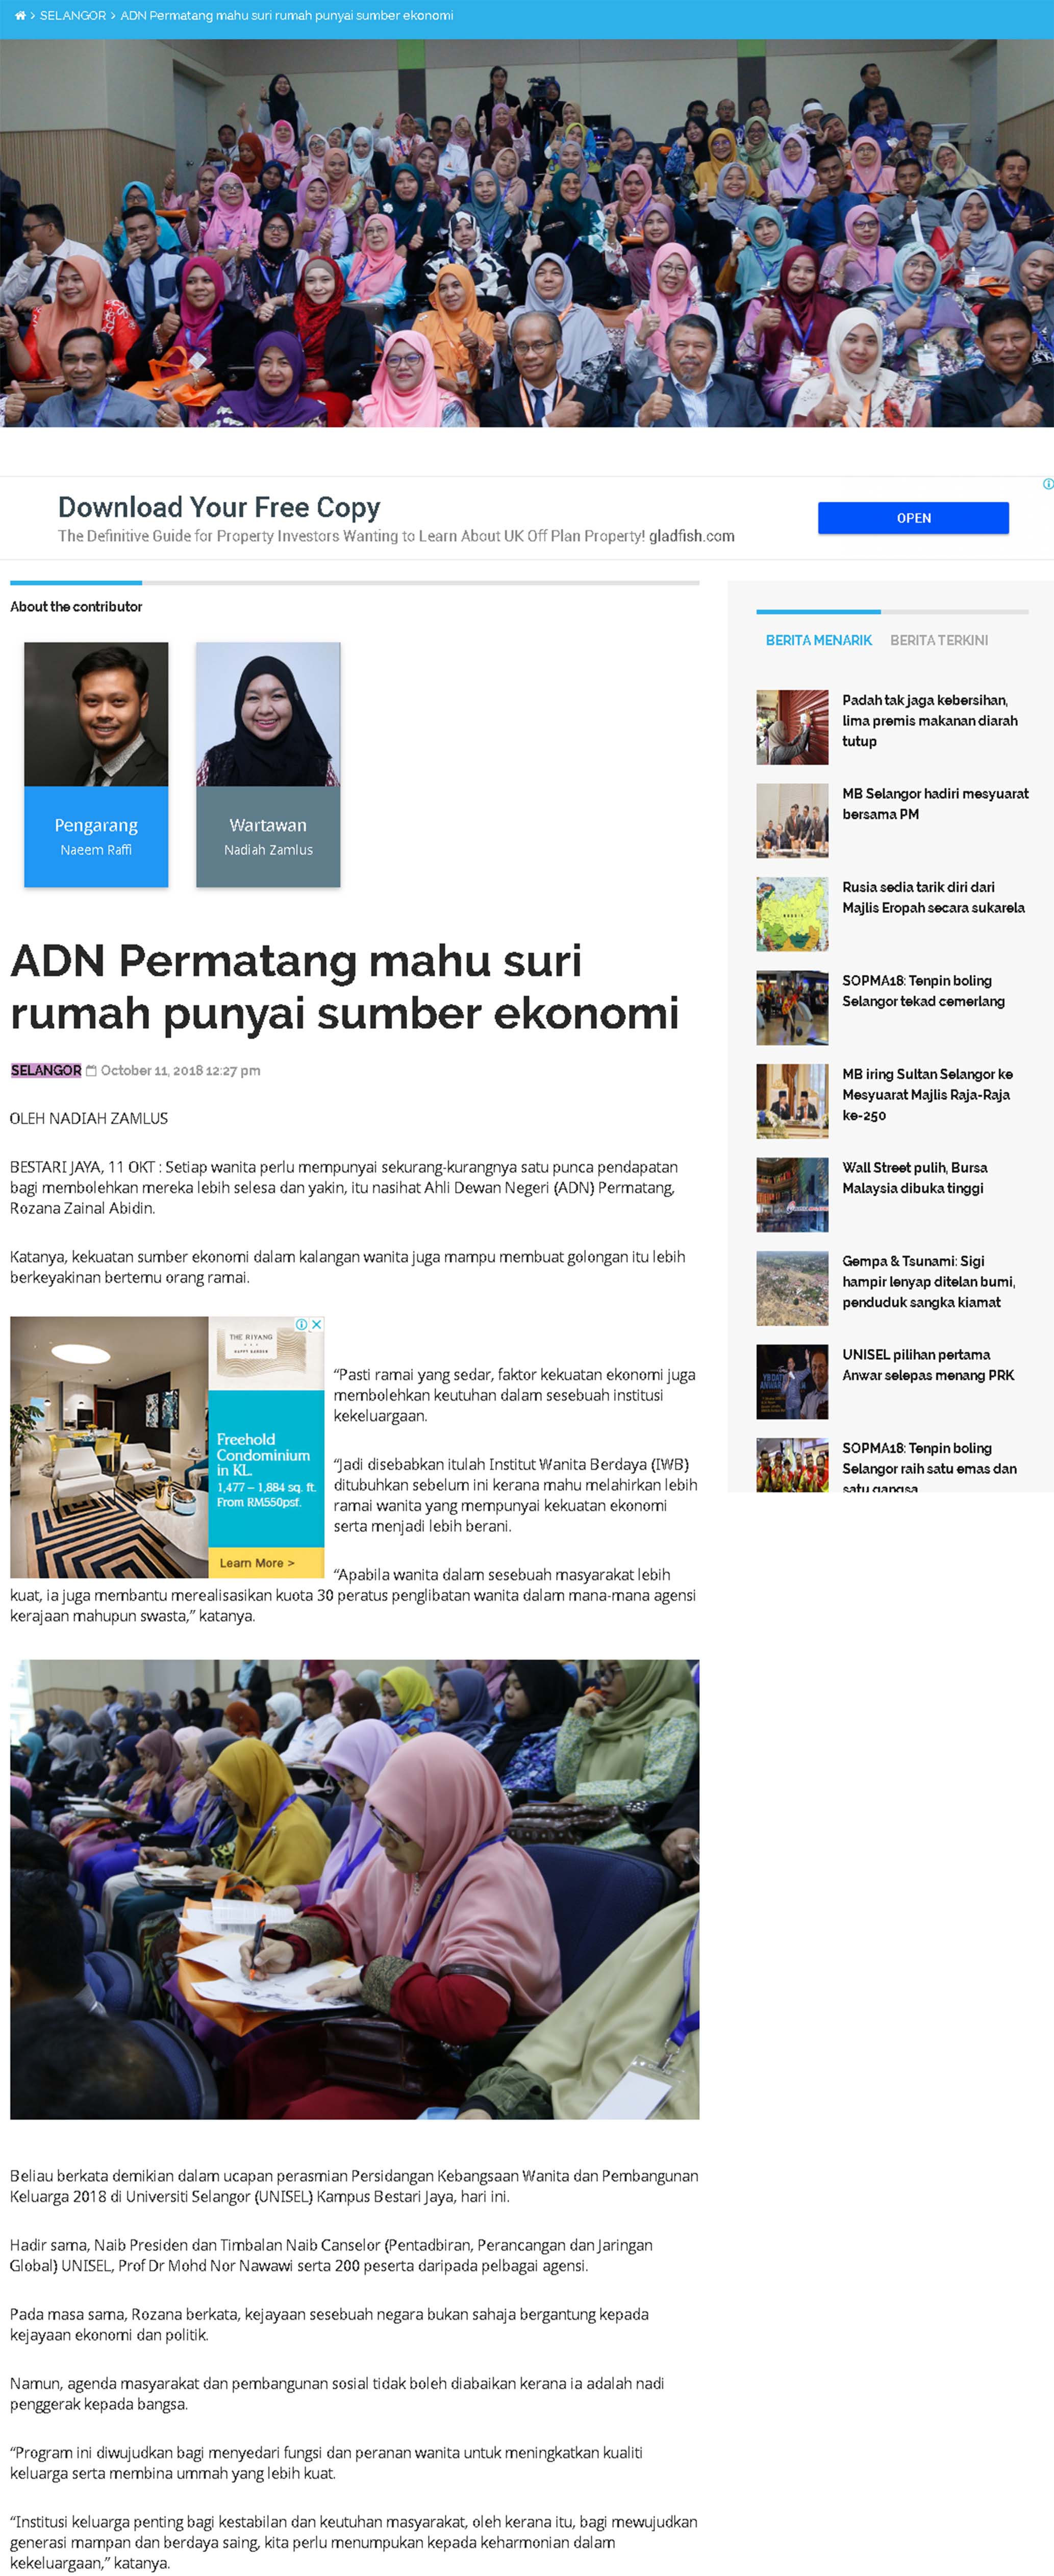 Selangor Kini Online - 11 Oktober 2018